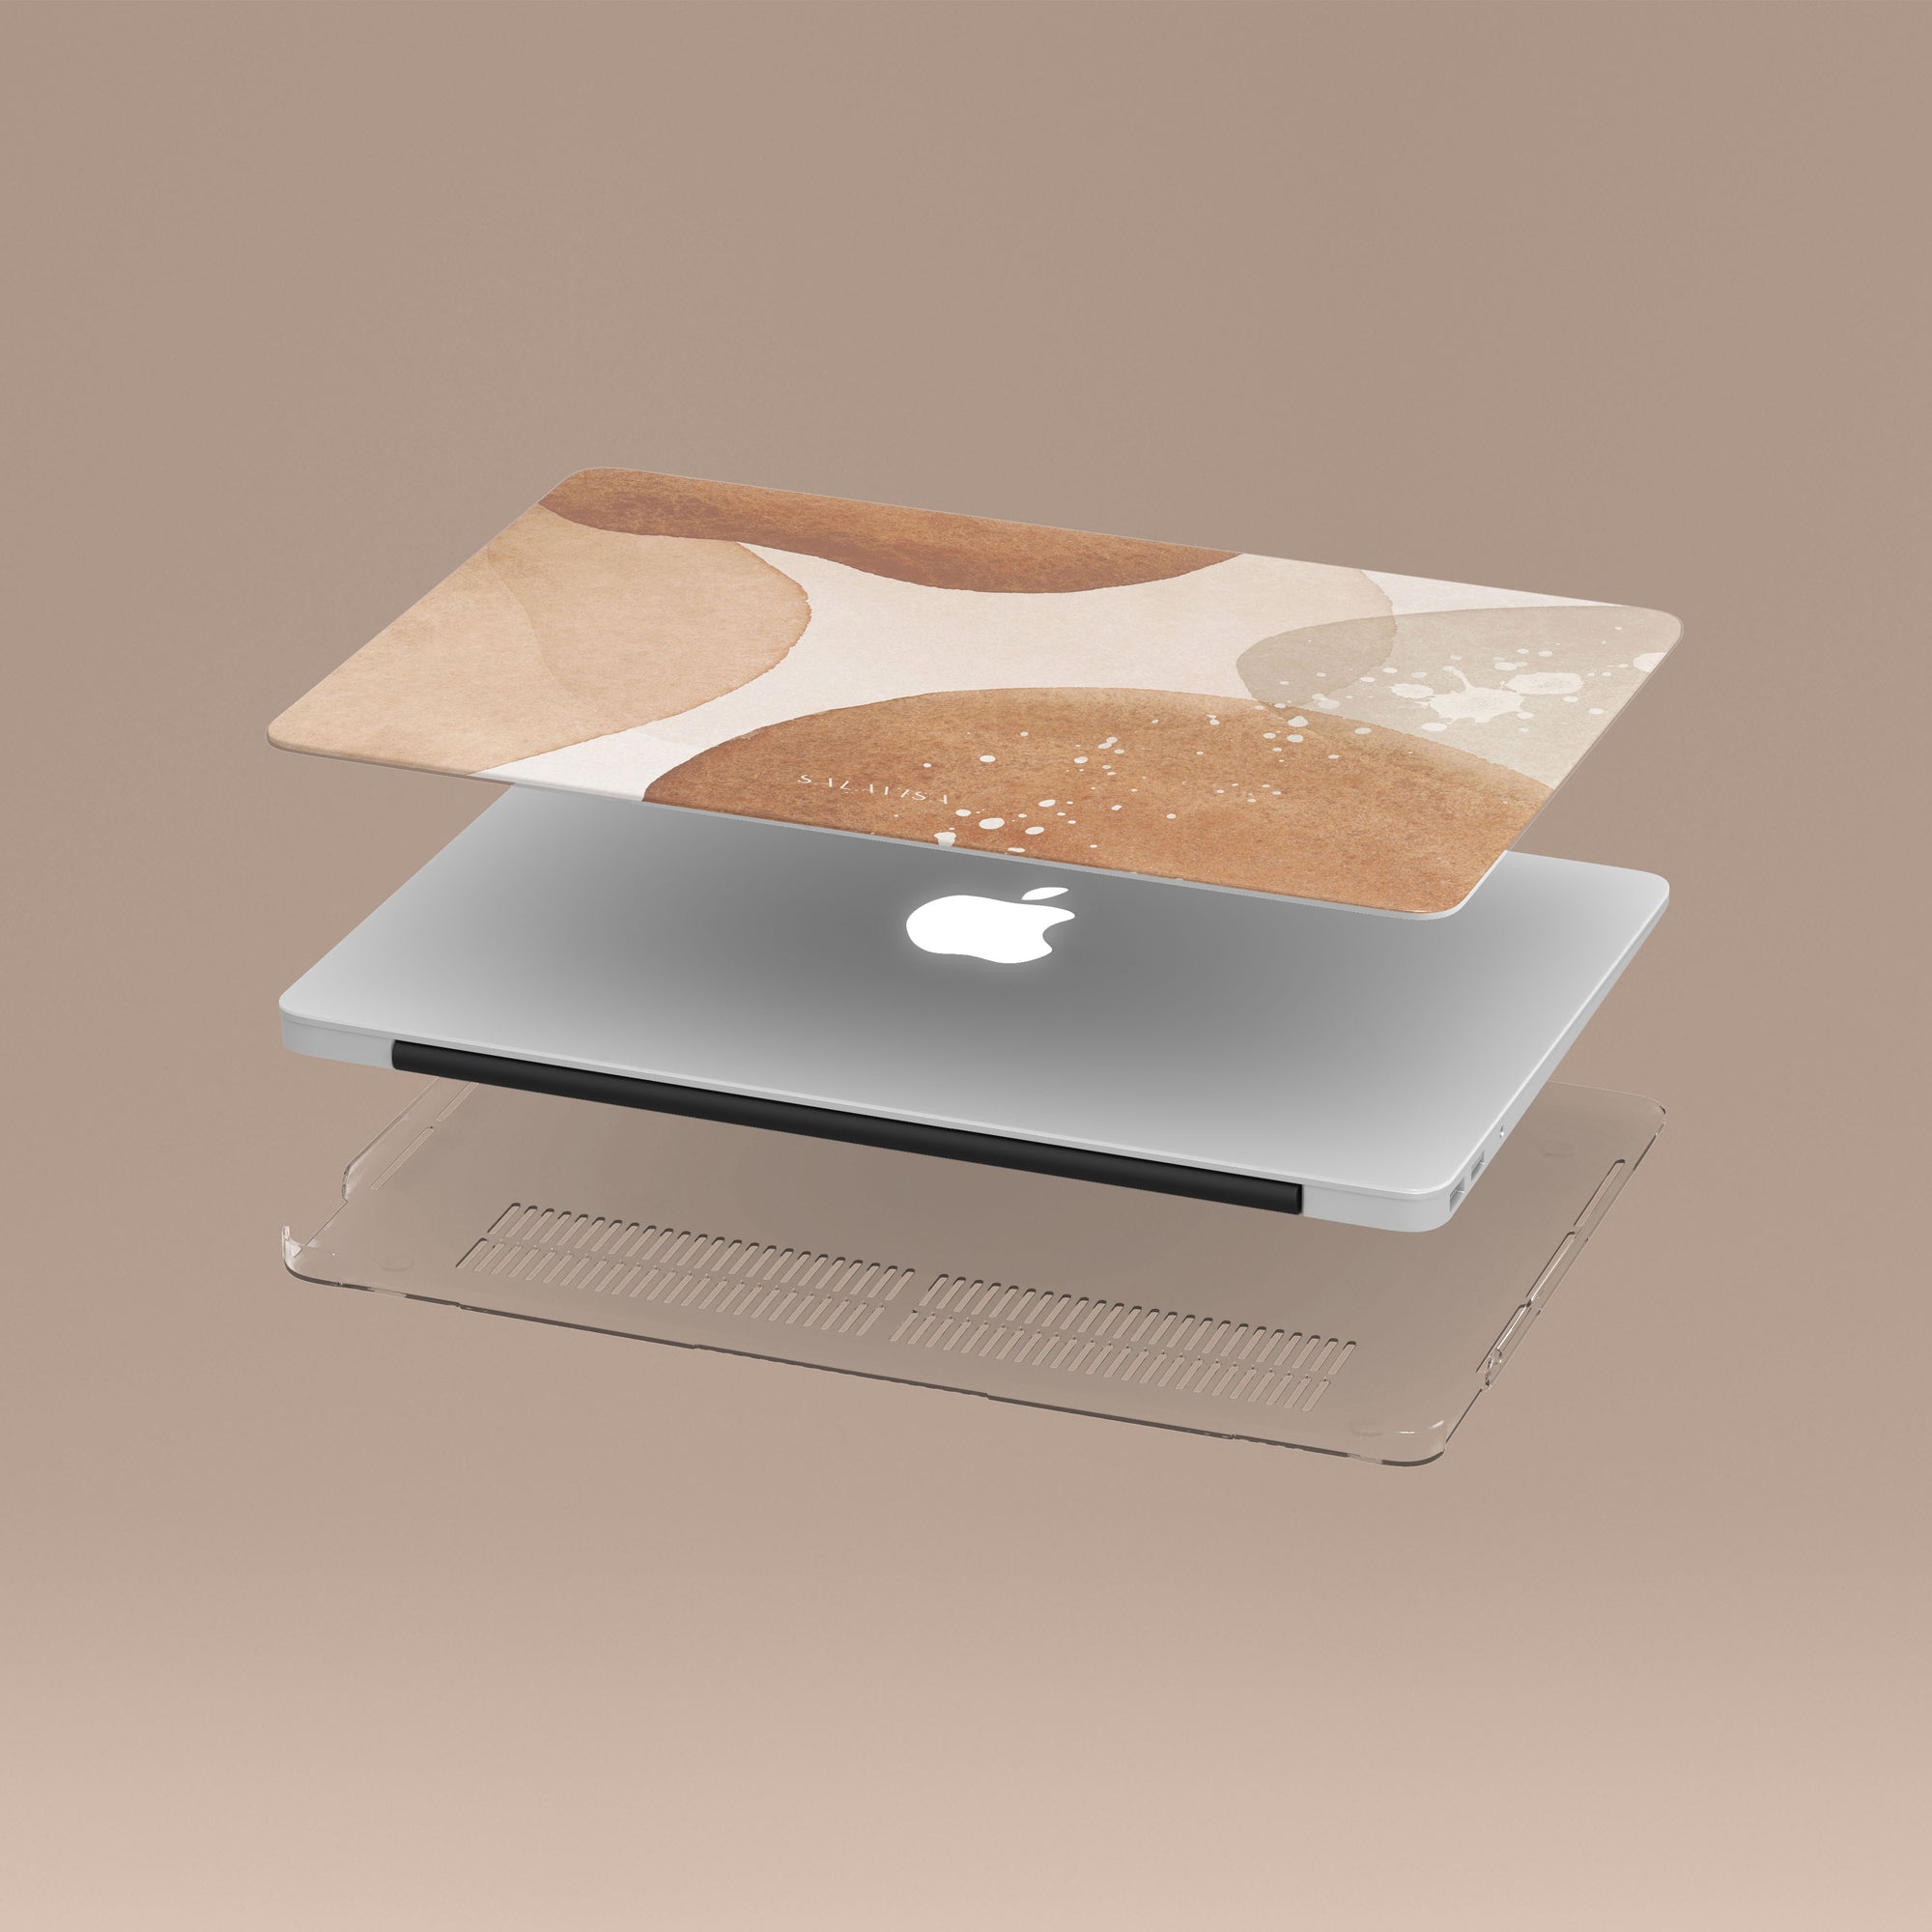 Beige Crush MacBook Case MacBook Cases - SALAVISA